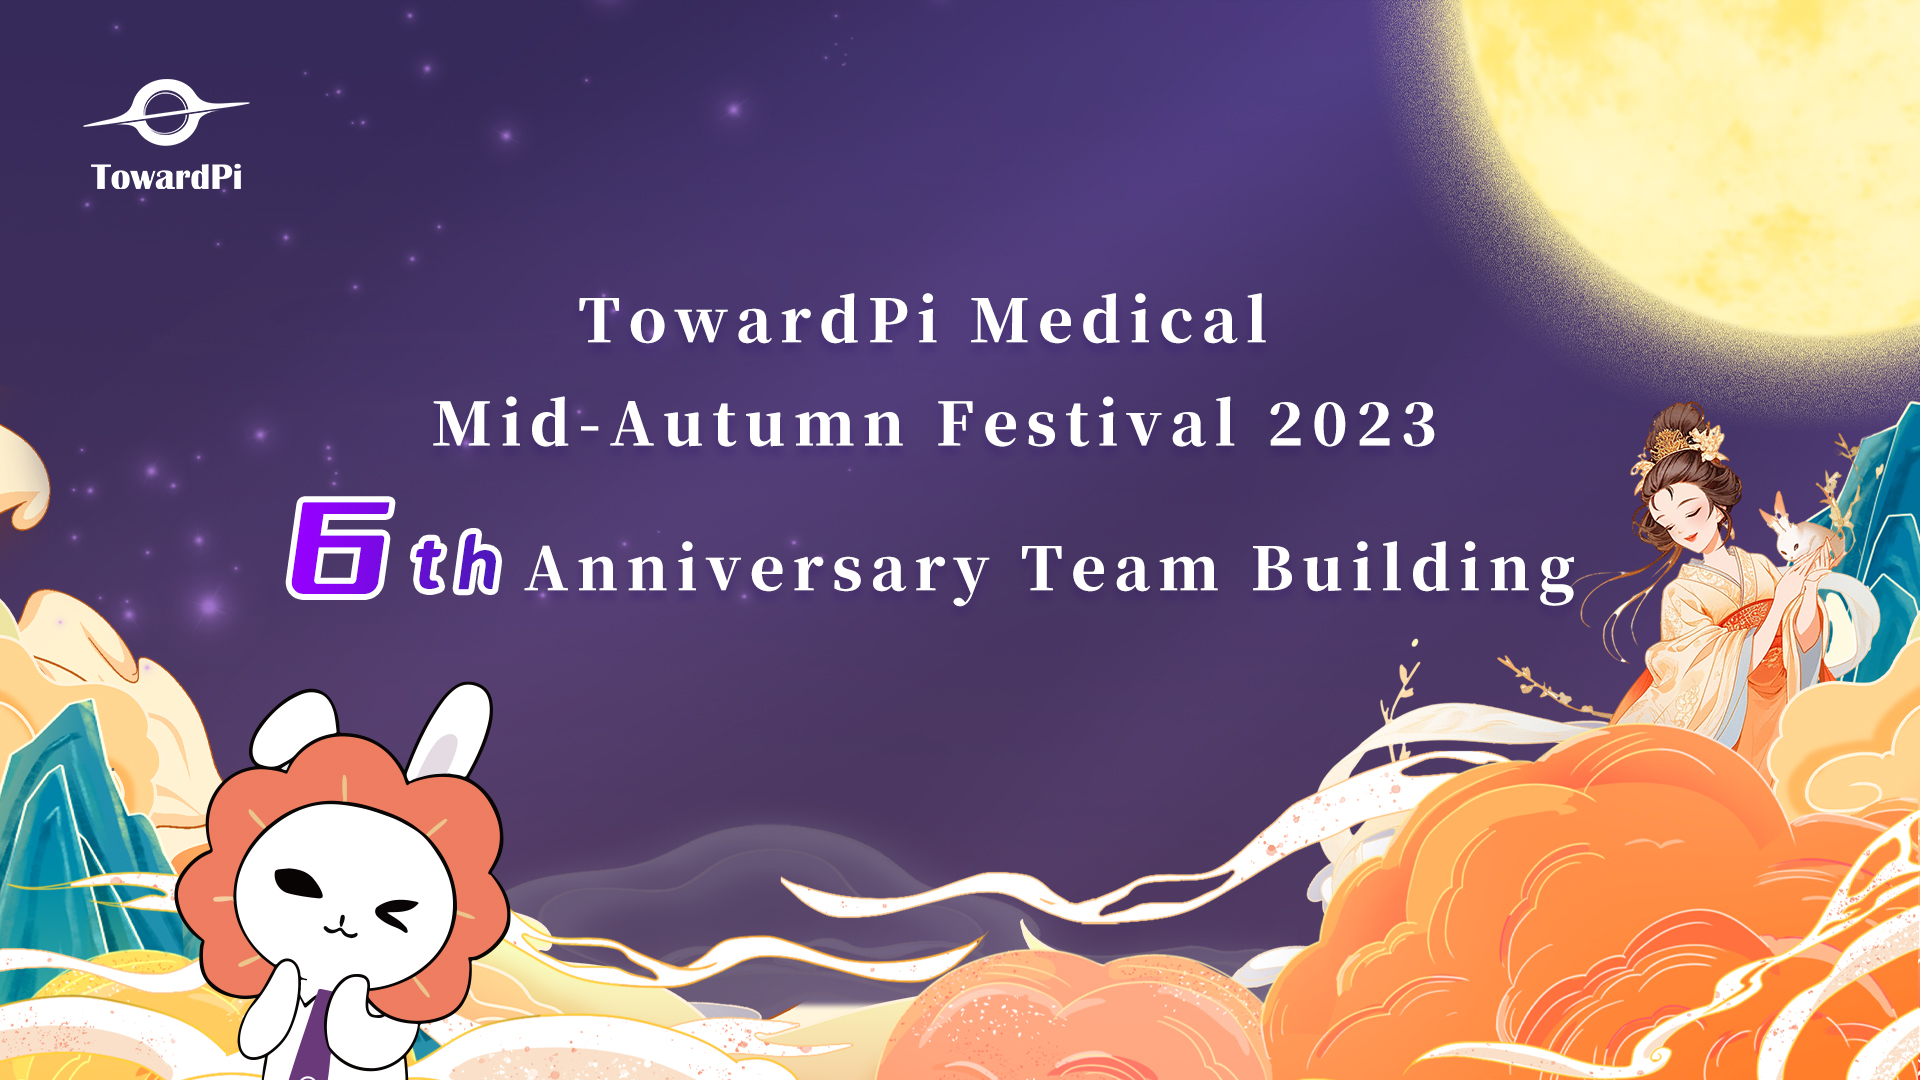 Mid-Autumn Festival and 6th Anniversary Celebration